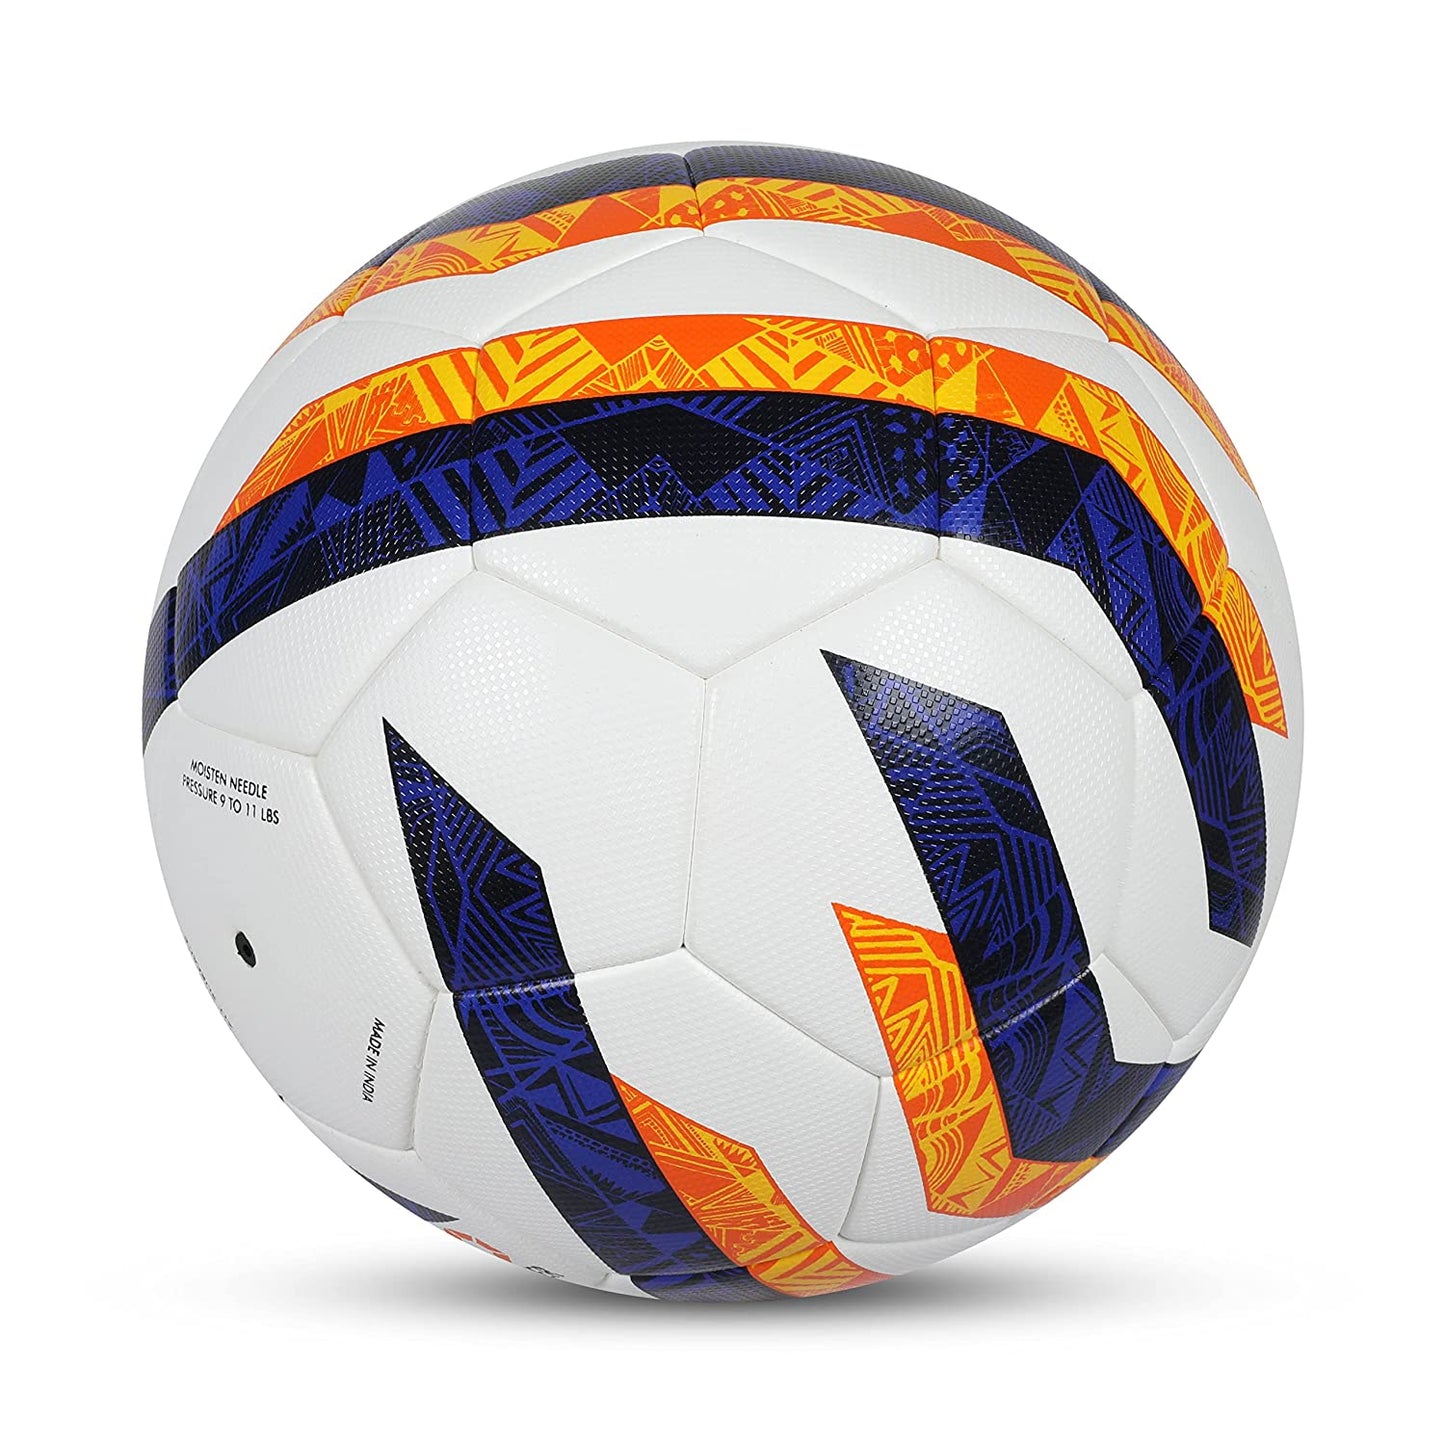 Nivia Dominator 3.0 Football - Size 5 - Best Price online Prokicksports.com